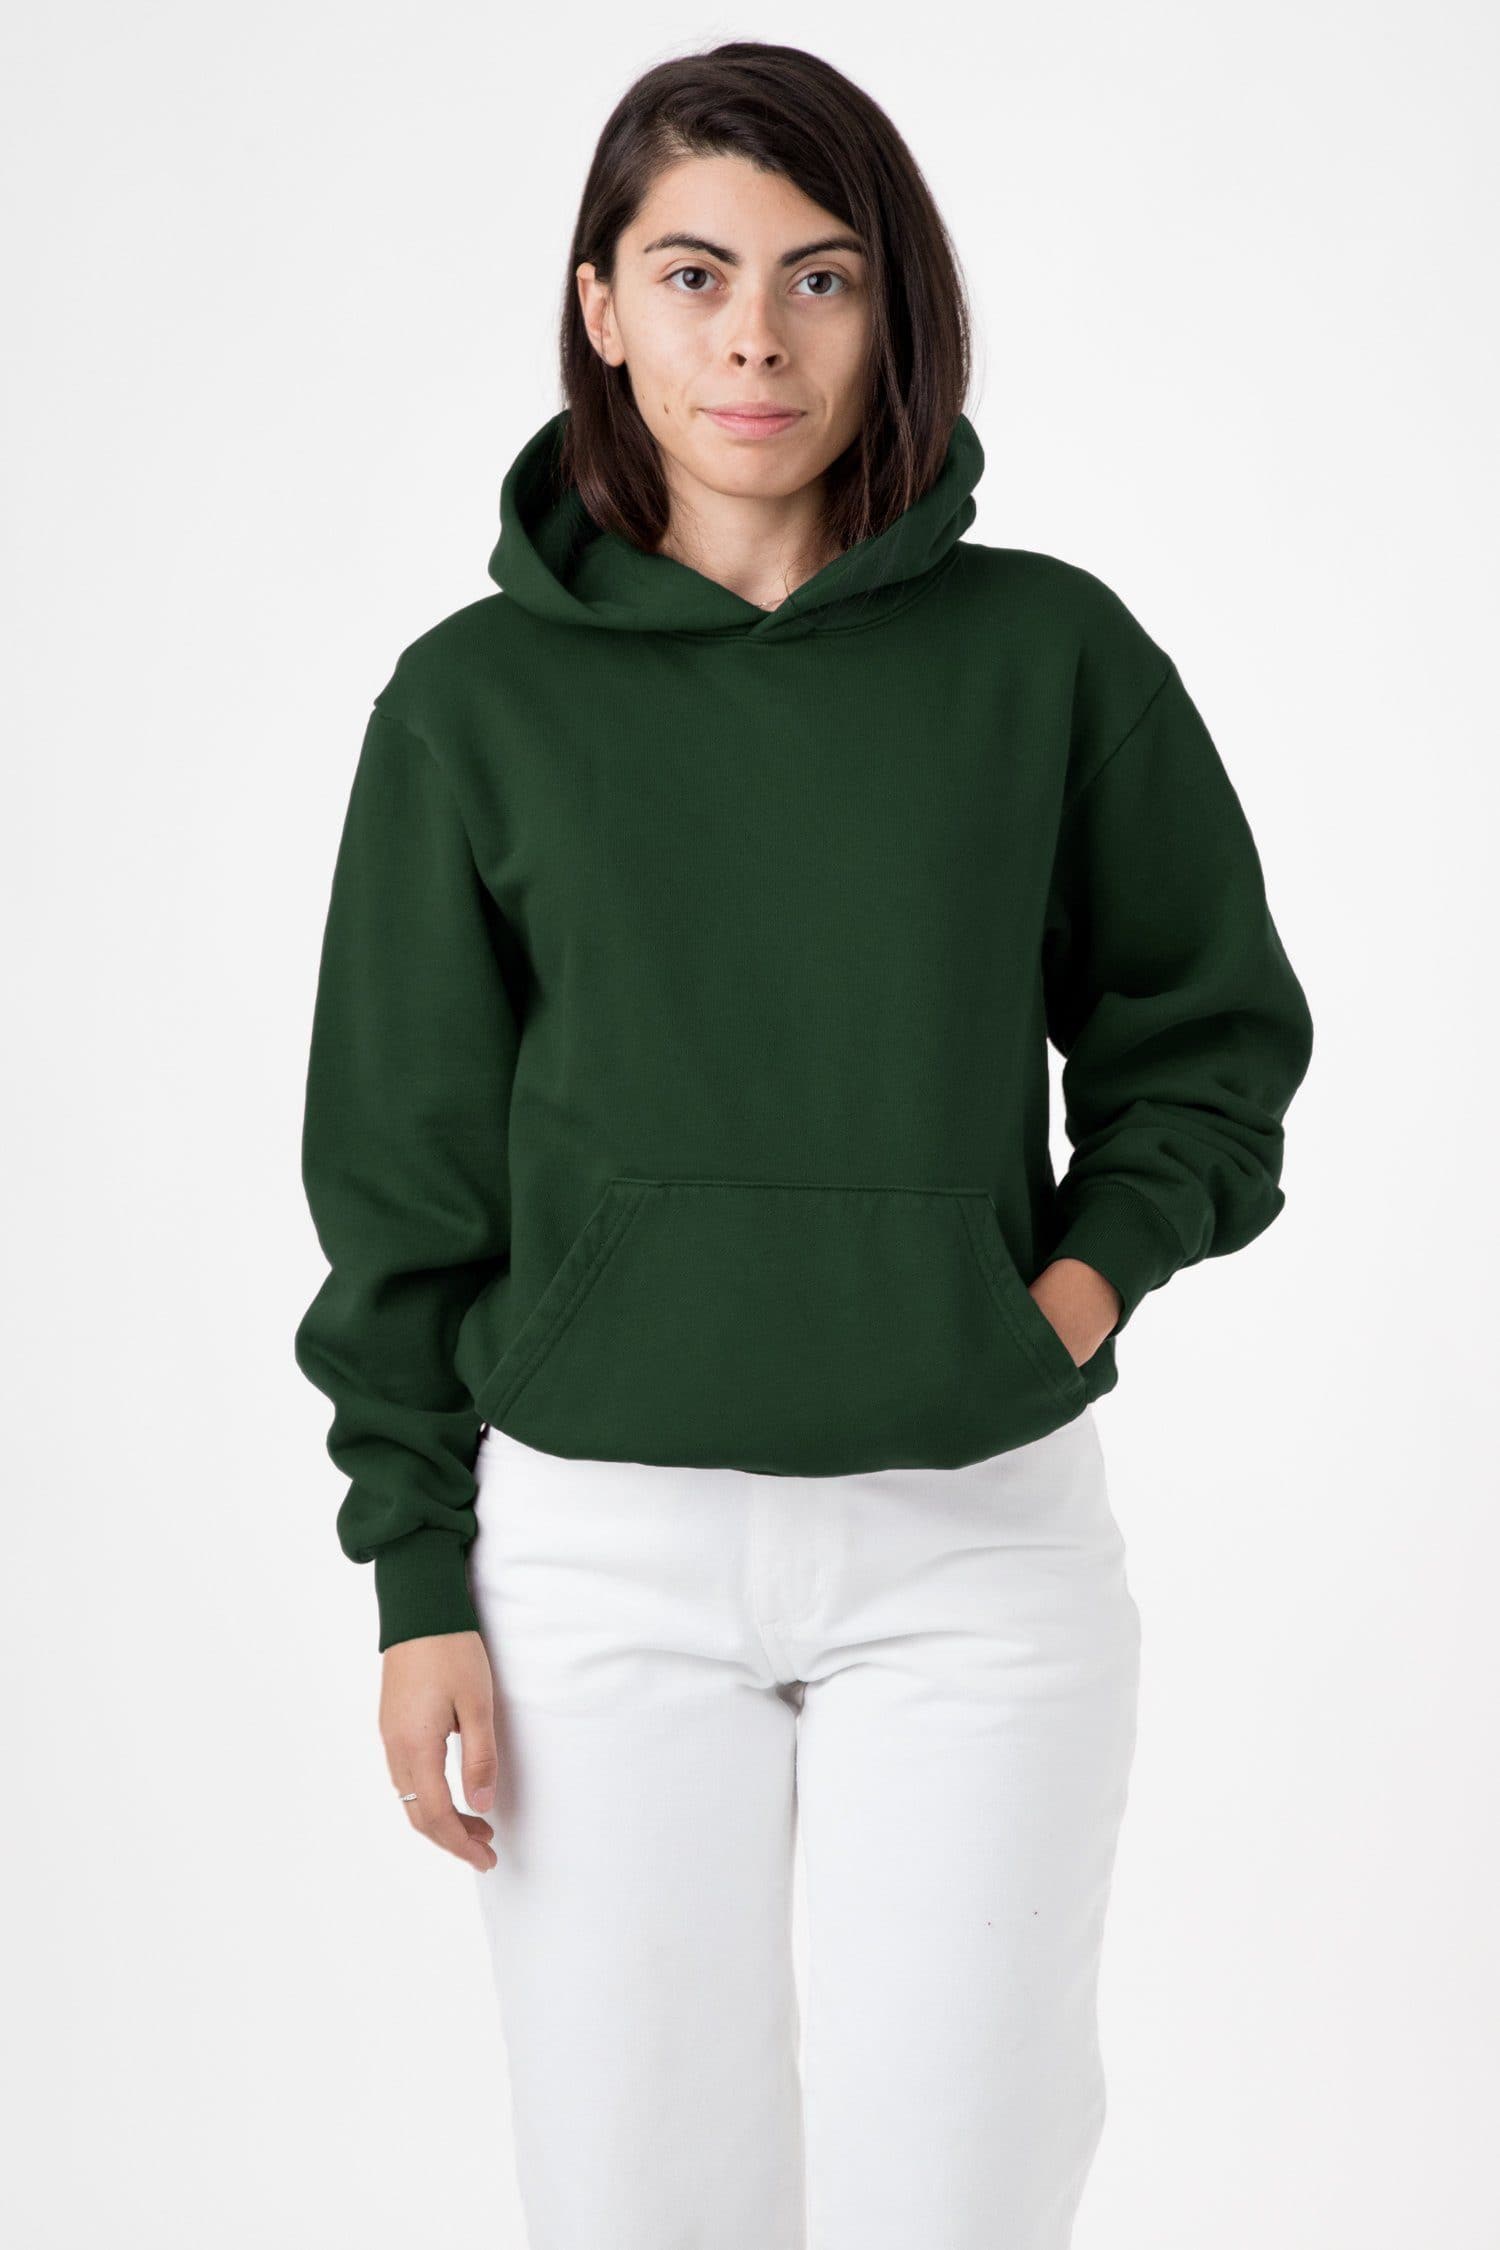 HF09GD Unisex - Garment Dye 14oz. Heavy Fleece Hooded Pullover Sweatshirt